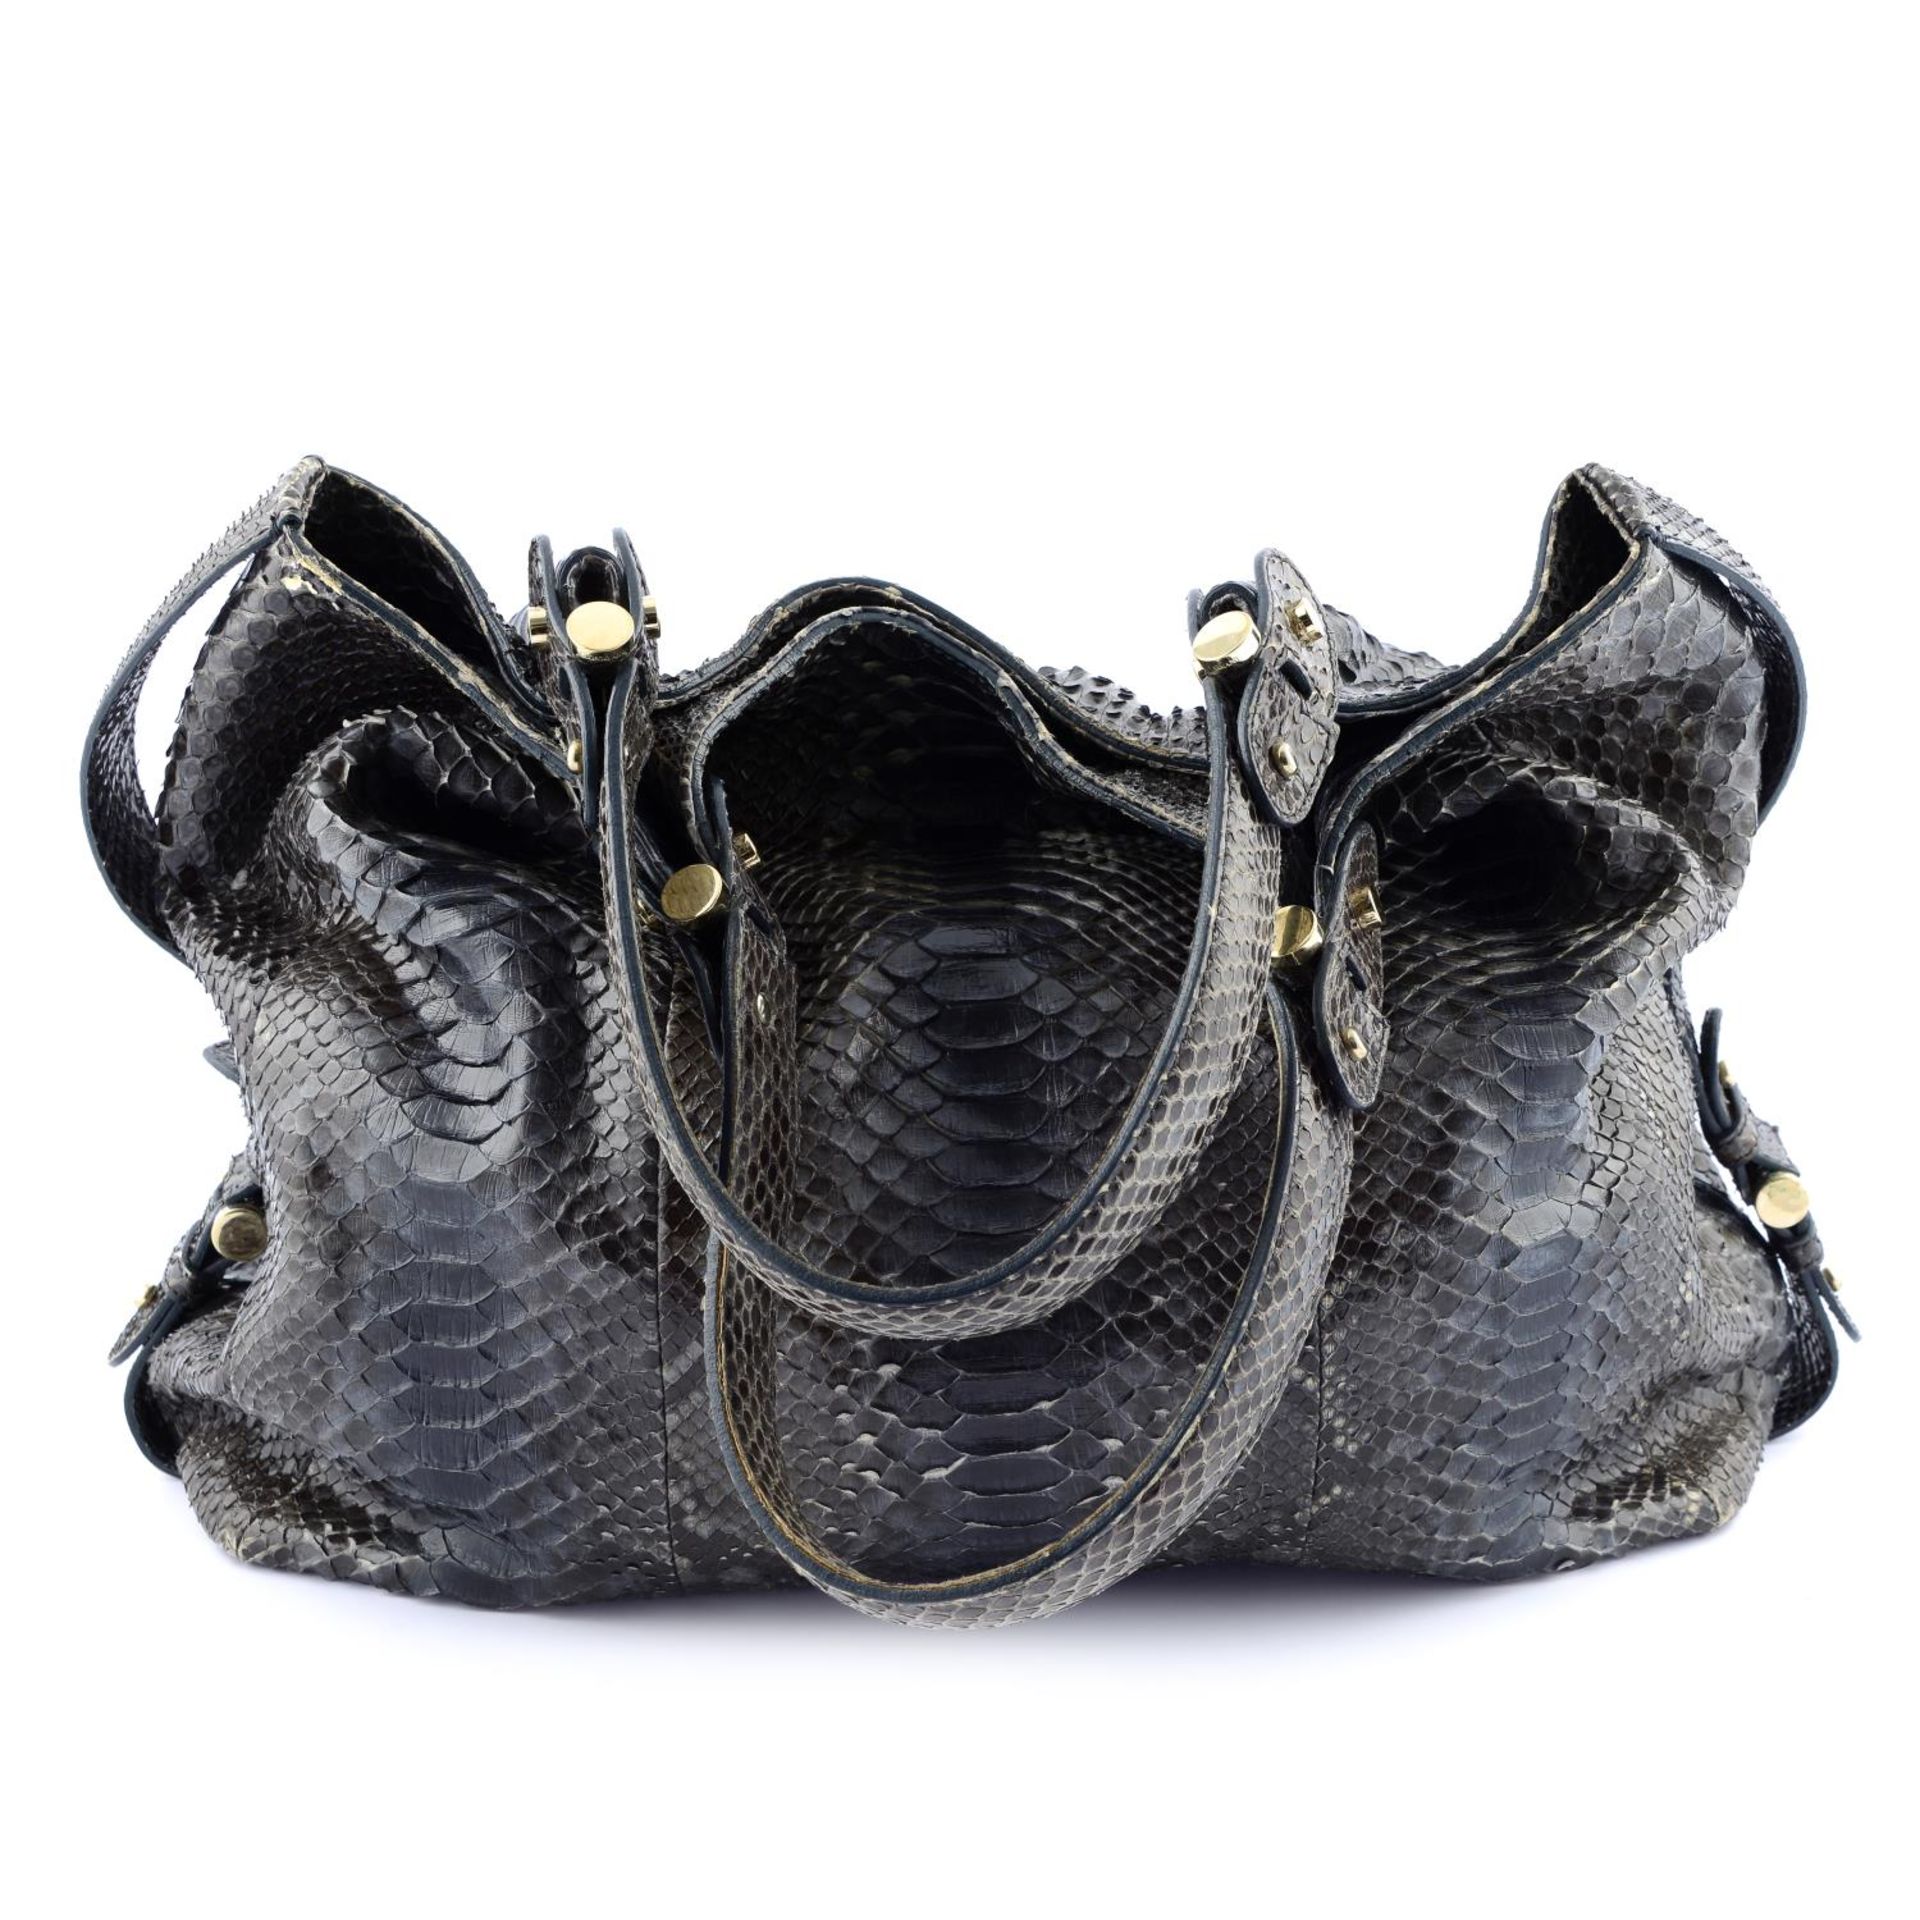 ARMANI - a python skin hobo handbag. - Bild 2 aus 7